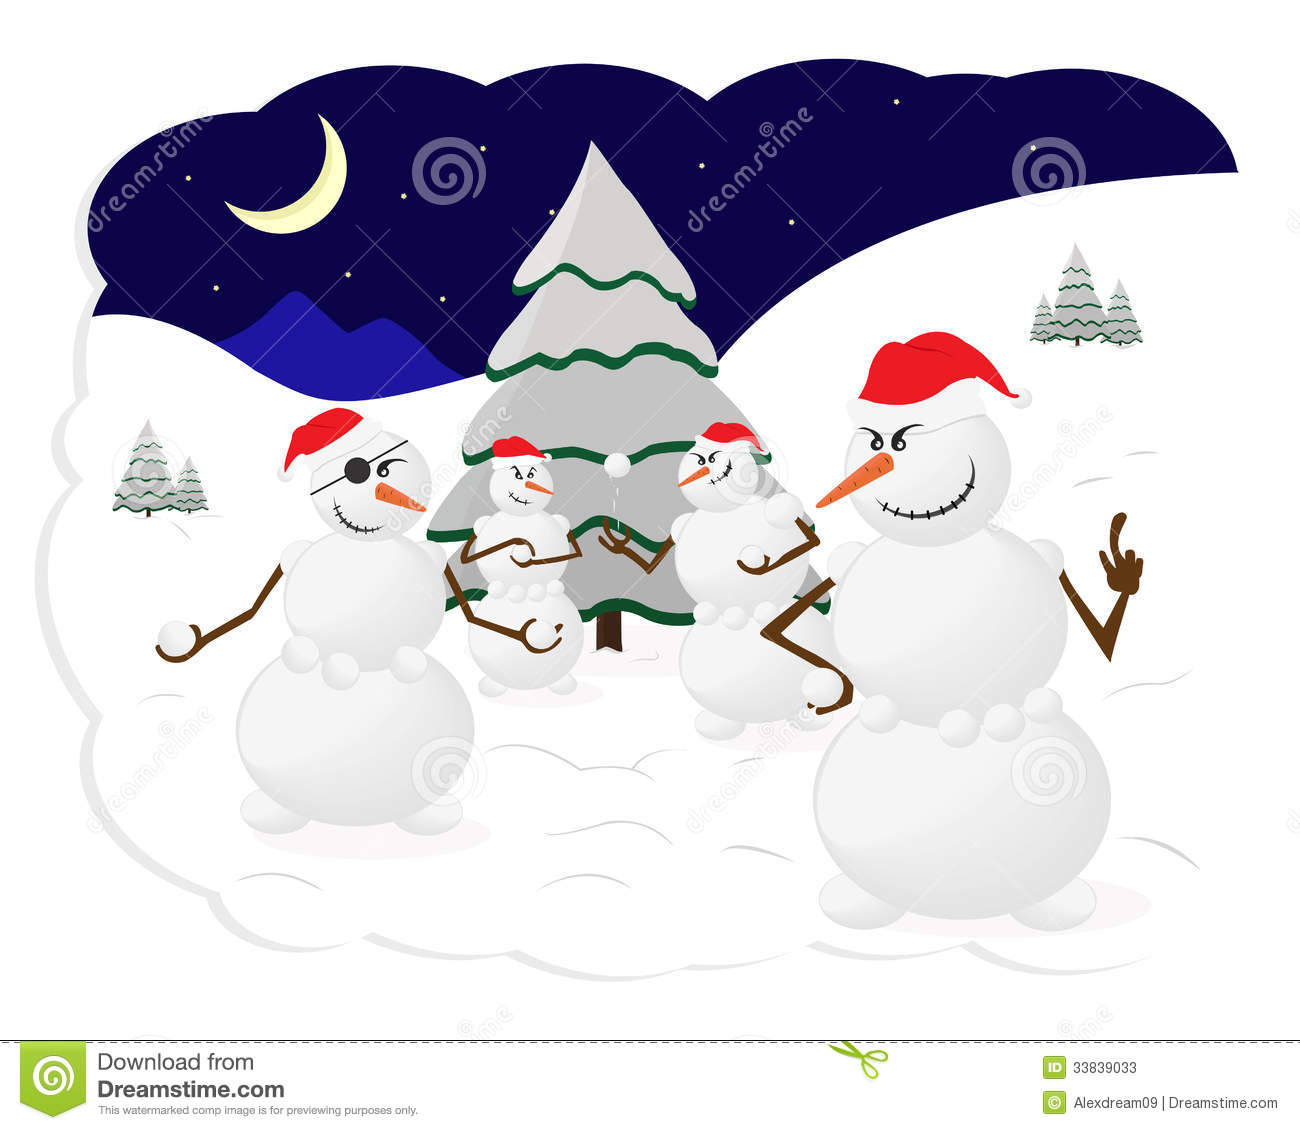 Snowmen Winter Snow Snowballs Game Fun Christmas Trees Stock Photos